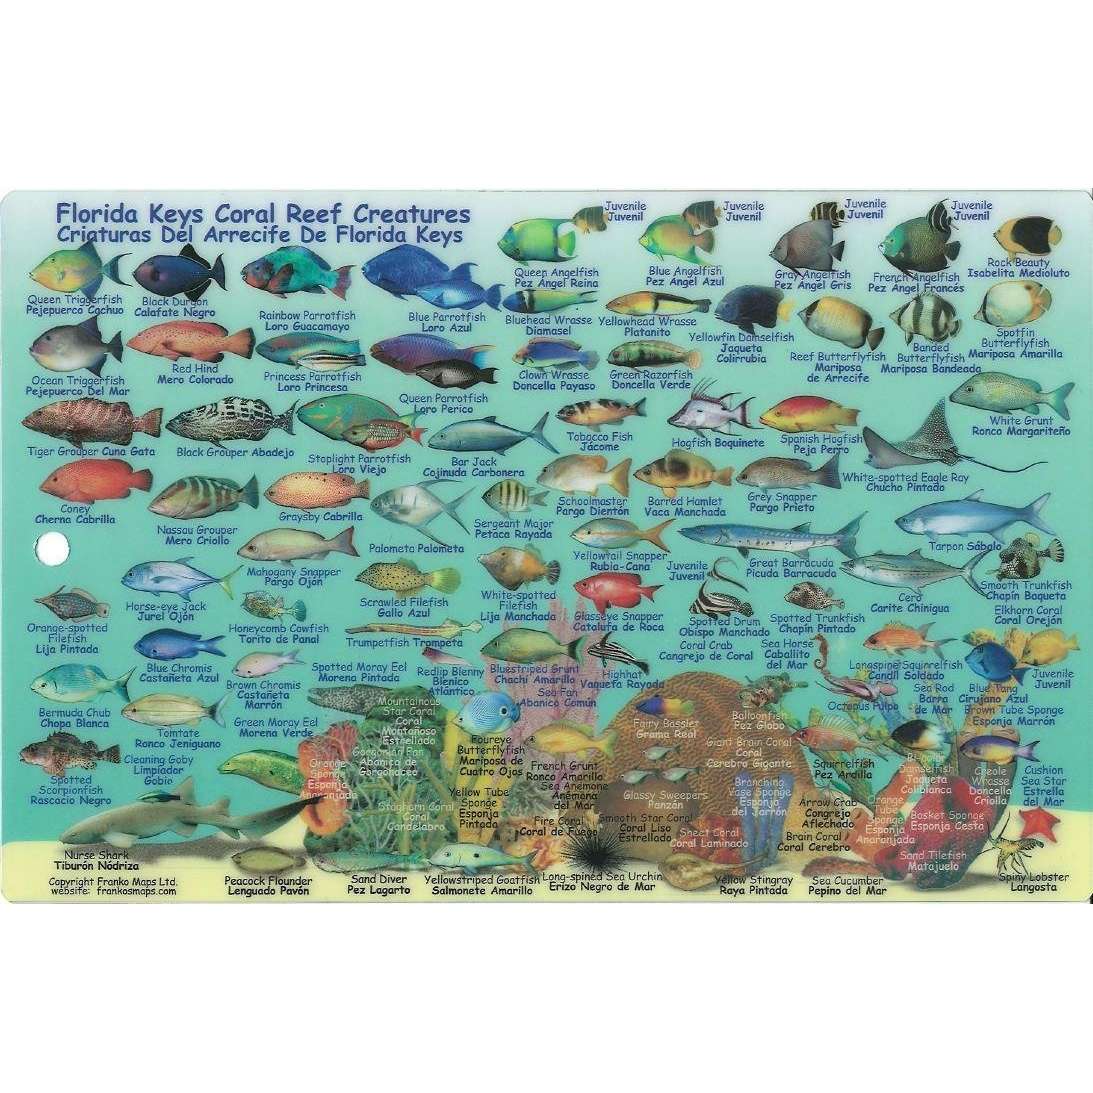 Turks & Caicos Sharks & Rays Laminated Fish Card by Franko Maps 